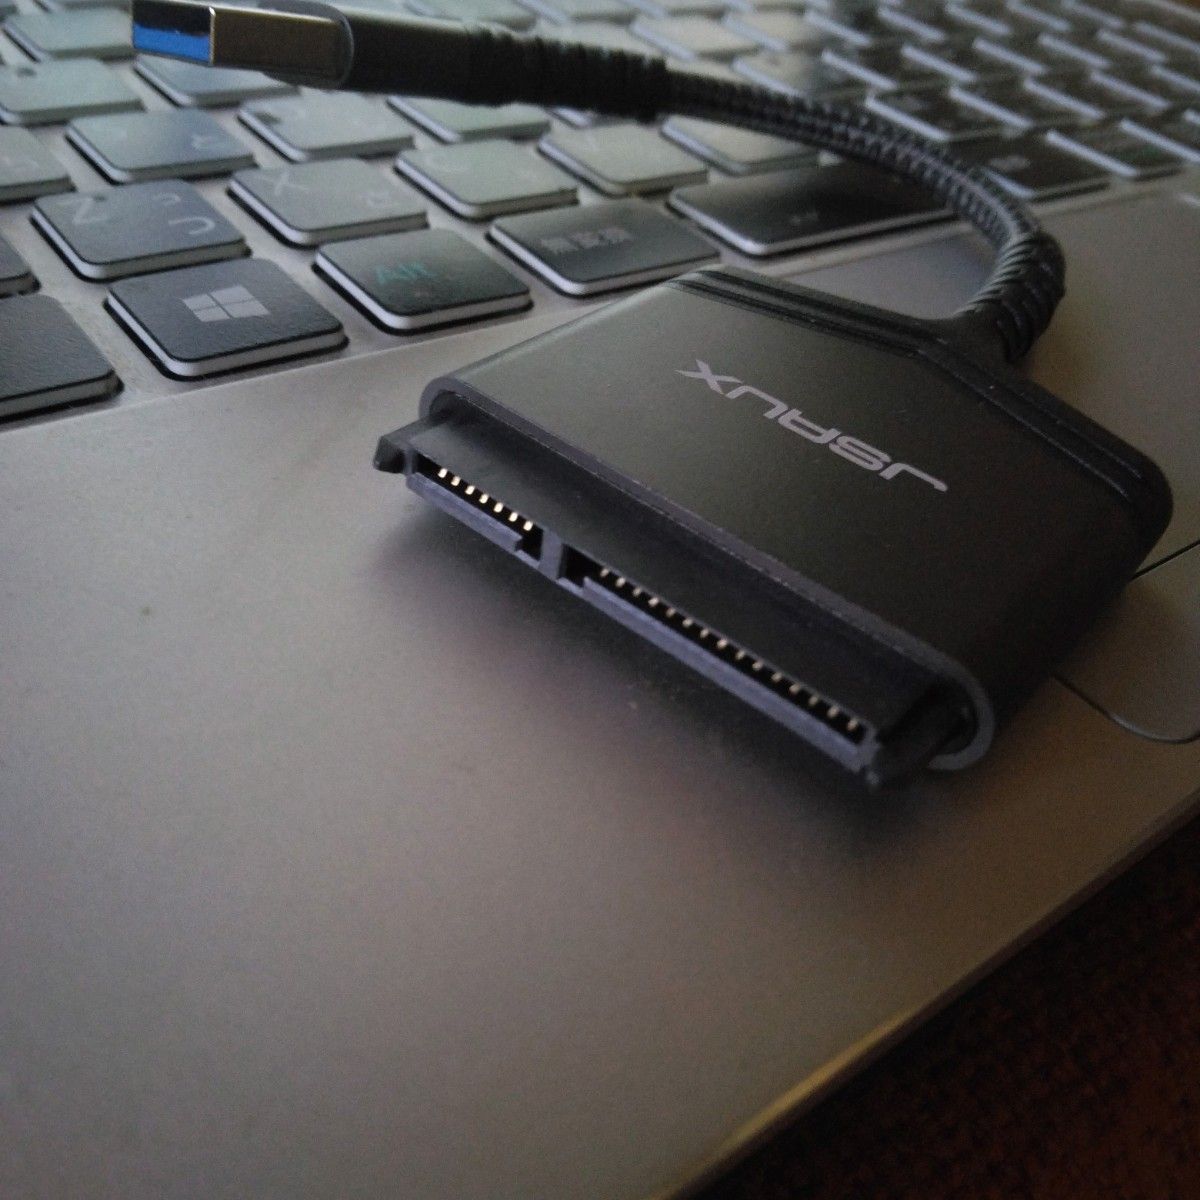 SATA-USB 3.0 変換ケーブル 2.5インチ SSD/HDD用 SATA USB変換アダプタ